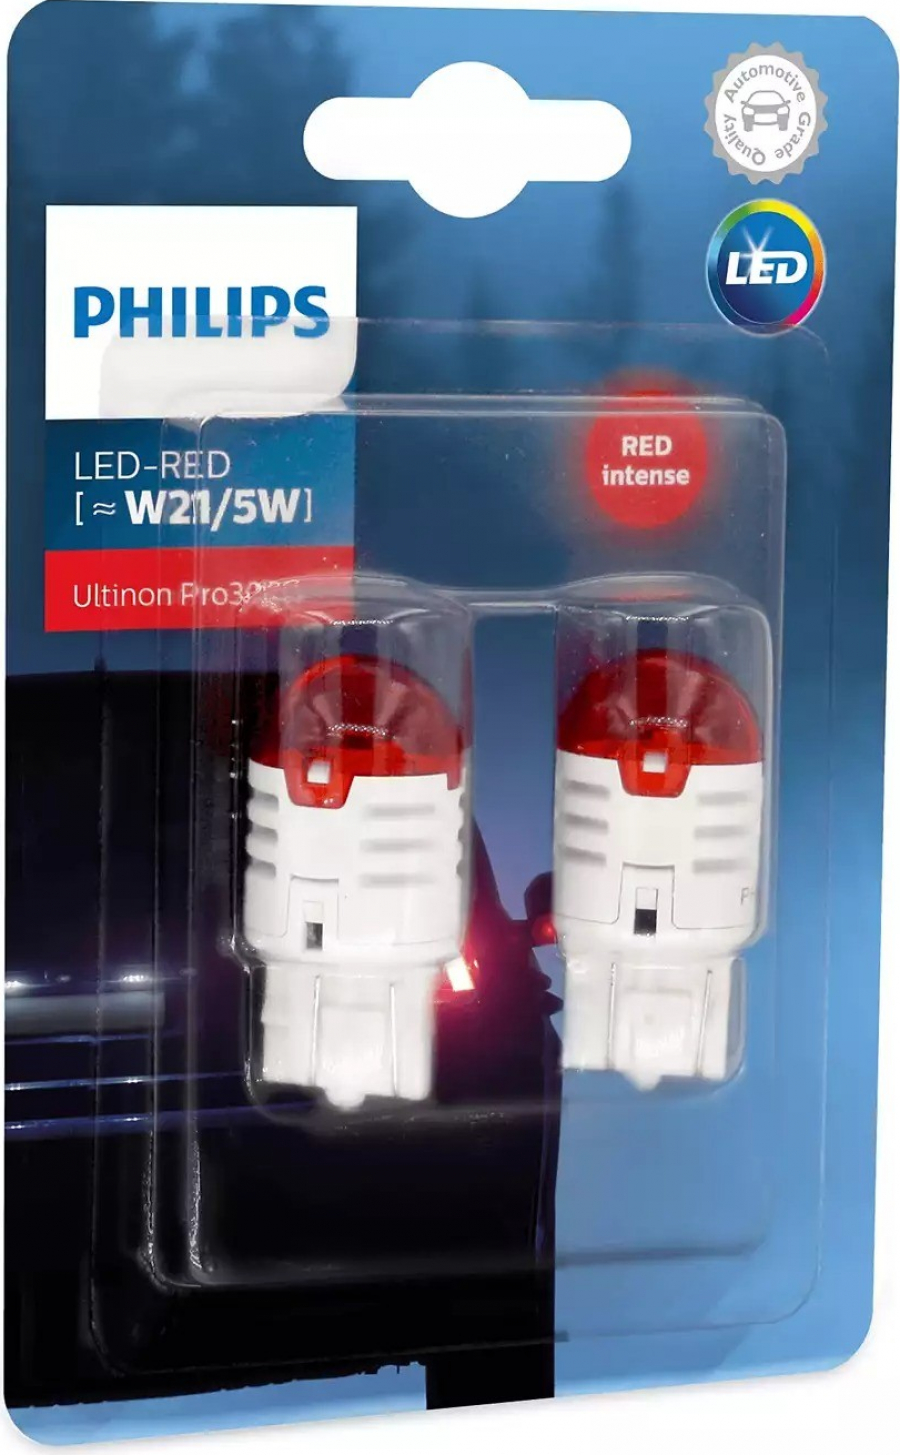 LED t20 7443 w21/5 philips ultinon pro3000 κόκκινο ζεύγος